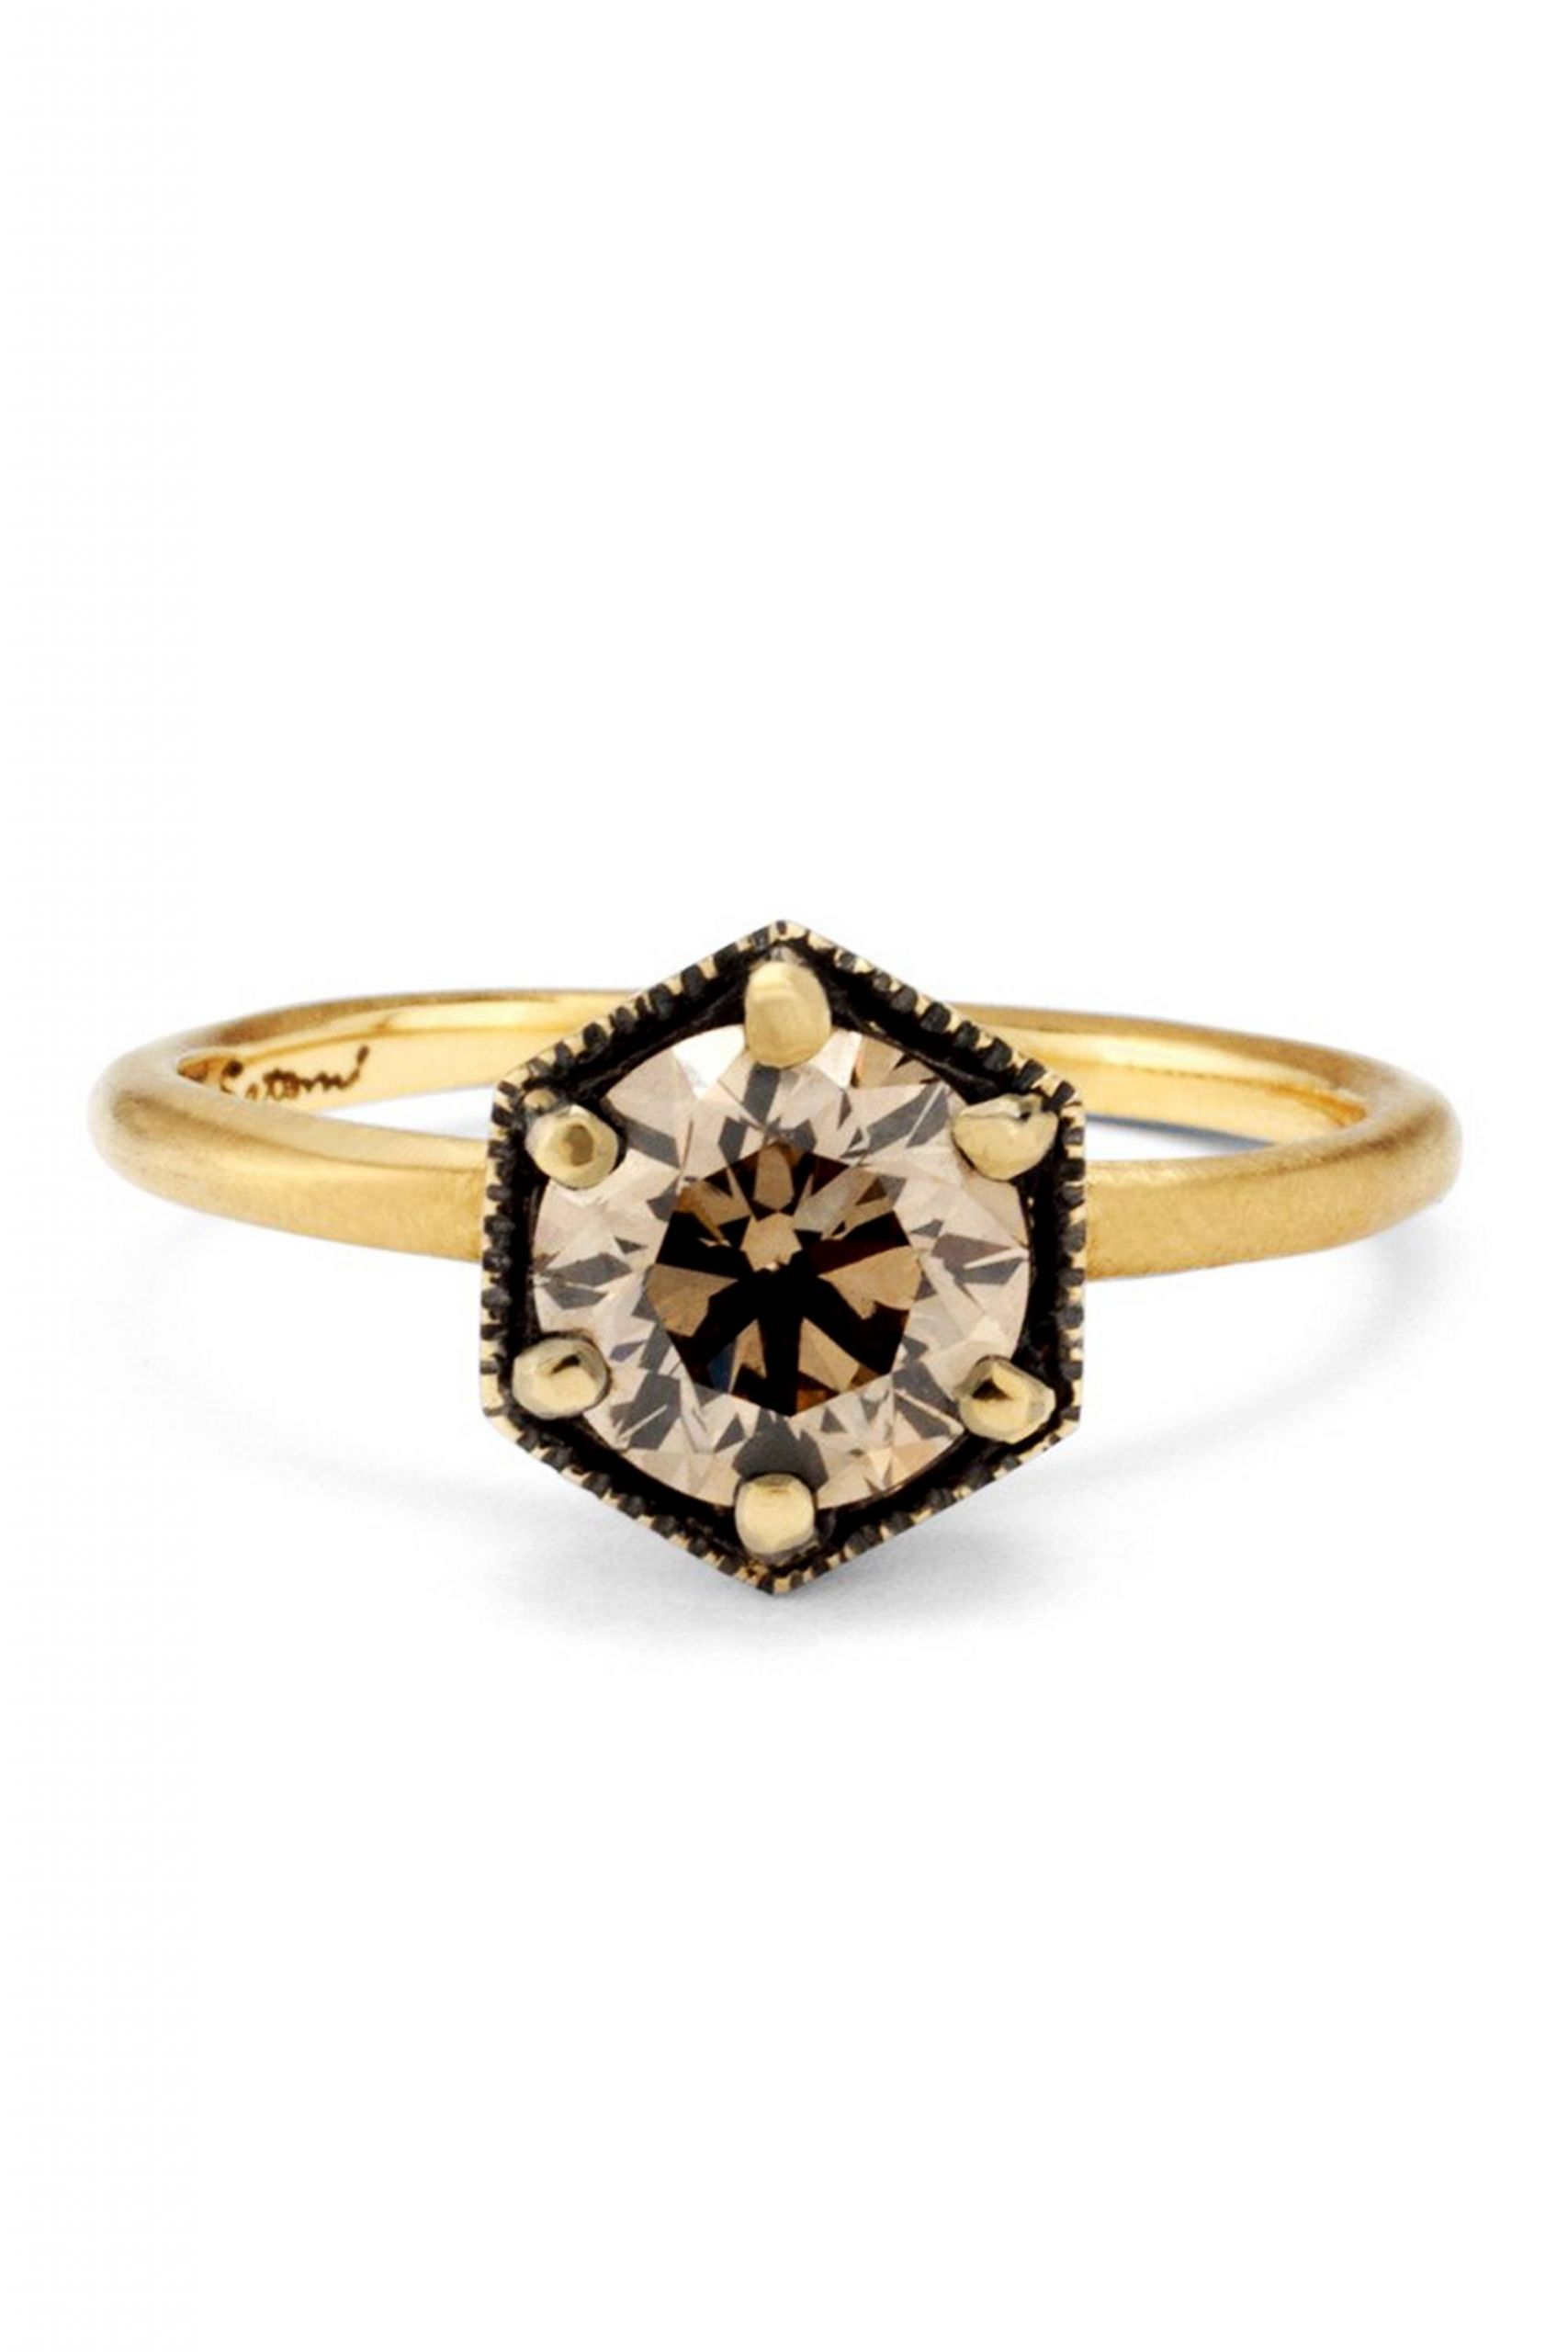 Unique Non Diamond Engagement Rings
 15 Best of Simple Engagement Rings Without Diamond